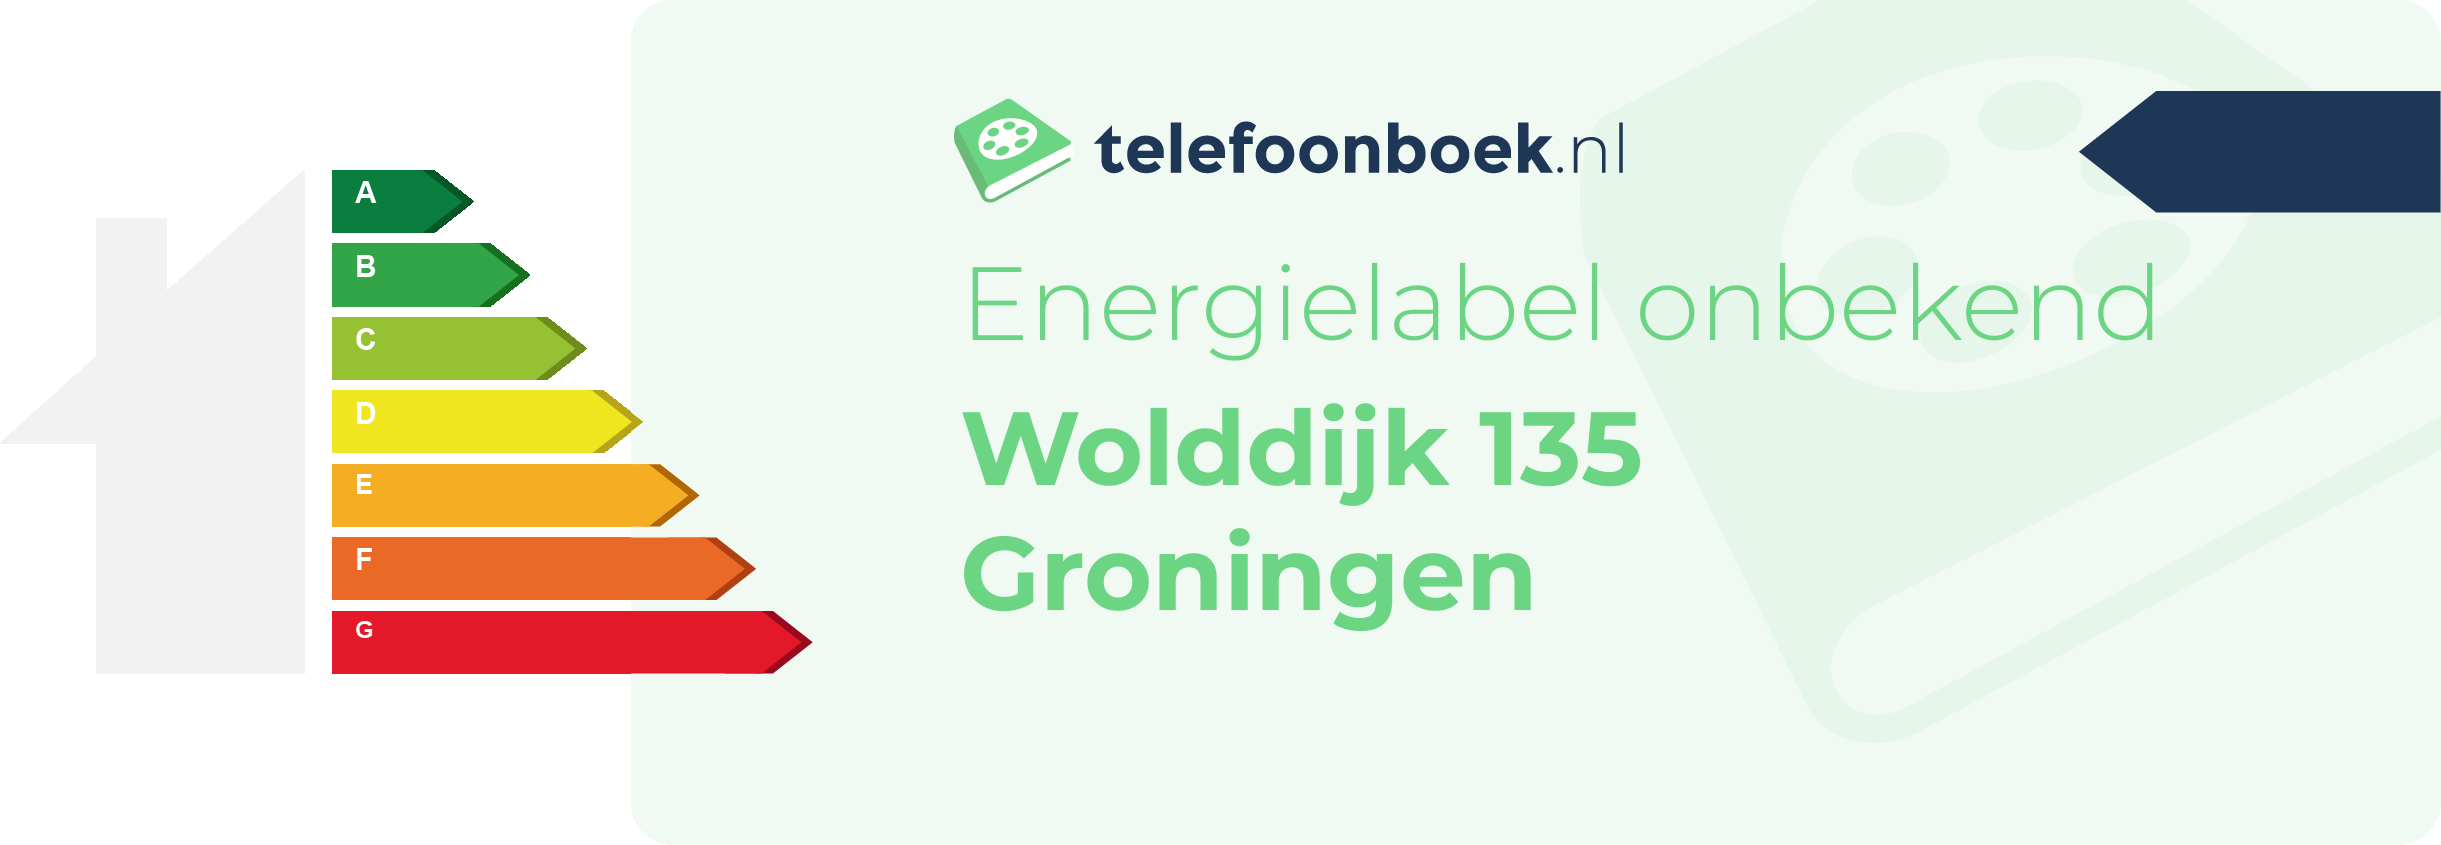 Energielabel Wolddijk 135 Groningen